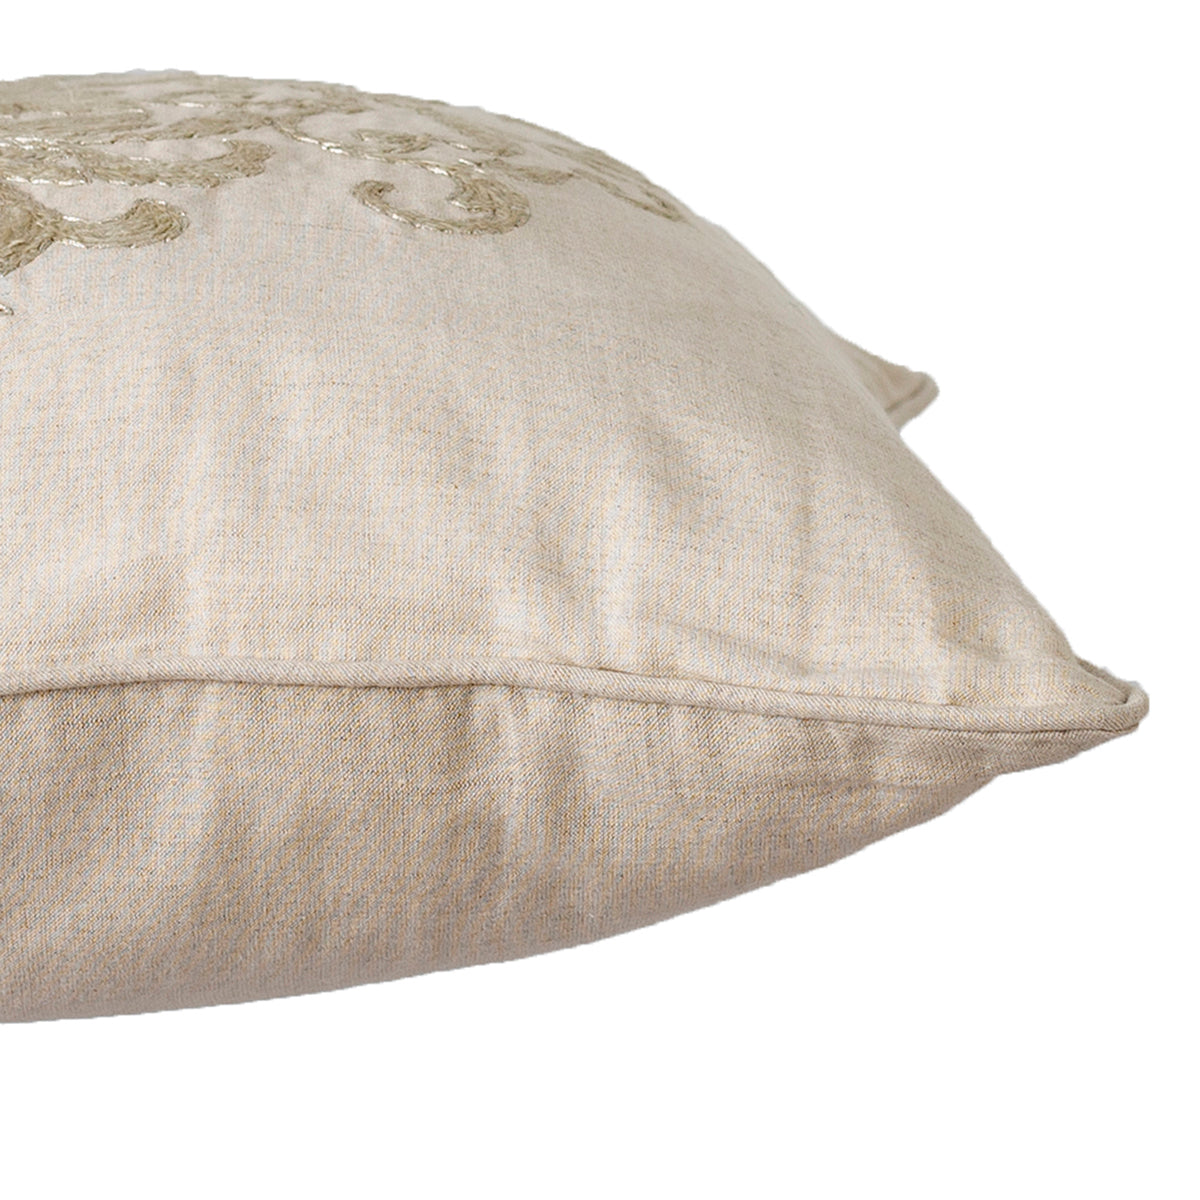 Grandeur VintFlow Handwork Hand Embridery 100% Cotton Neutral Cushion Cover